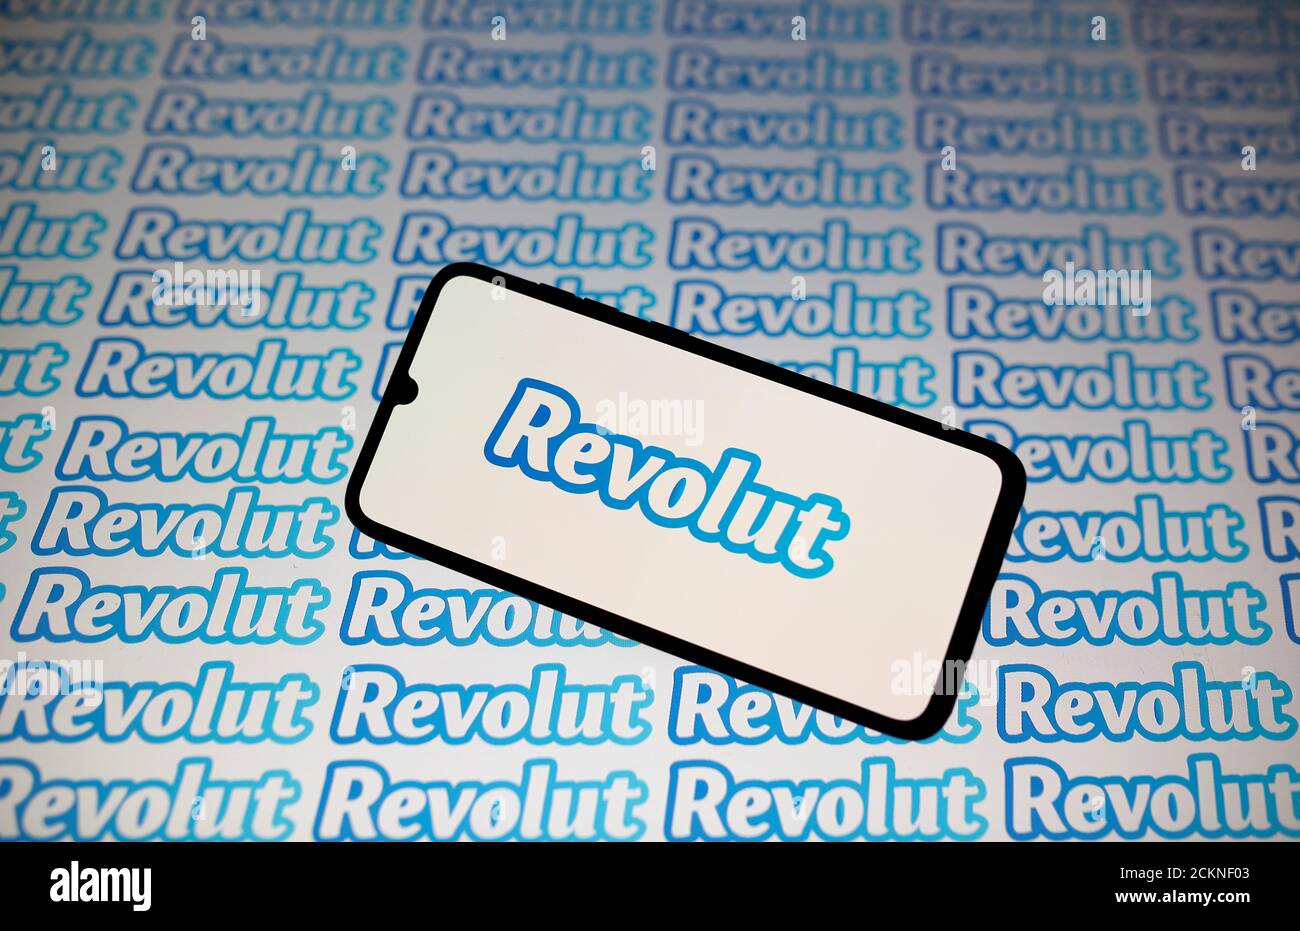 Revolut logo Stock Photo - Alamy